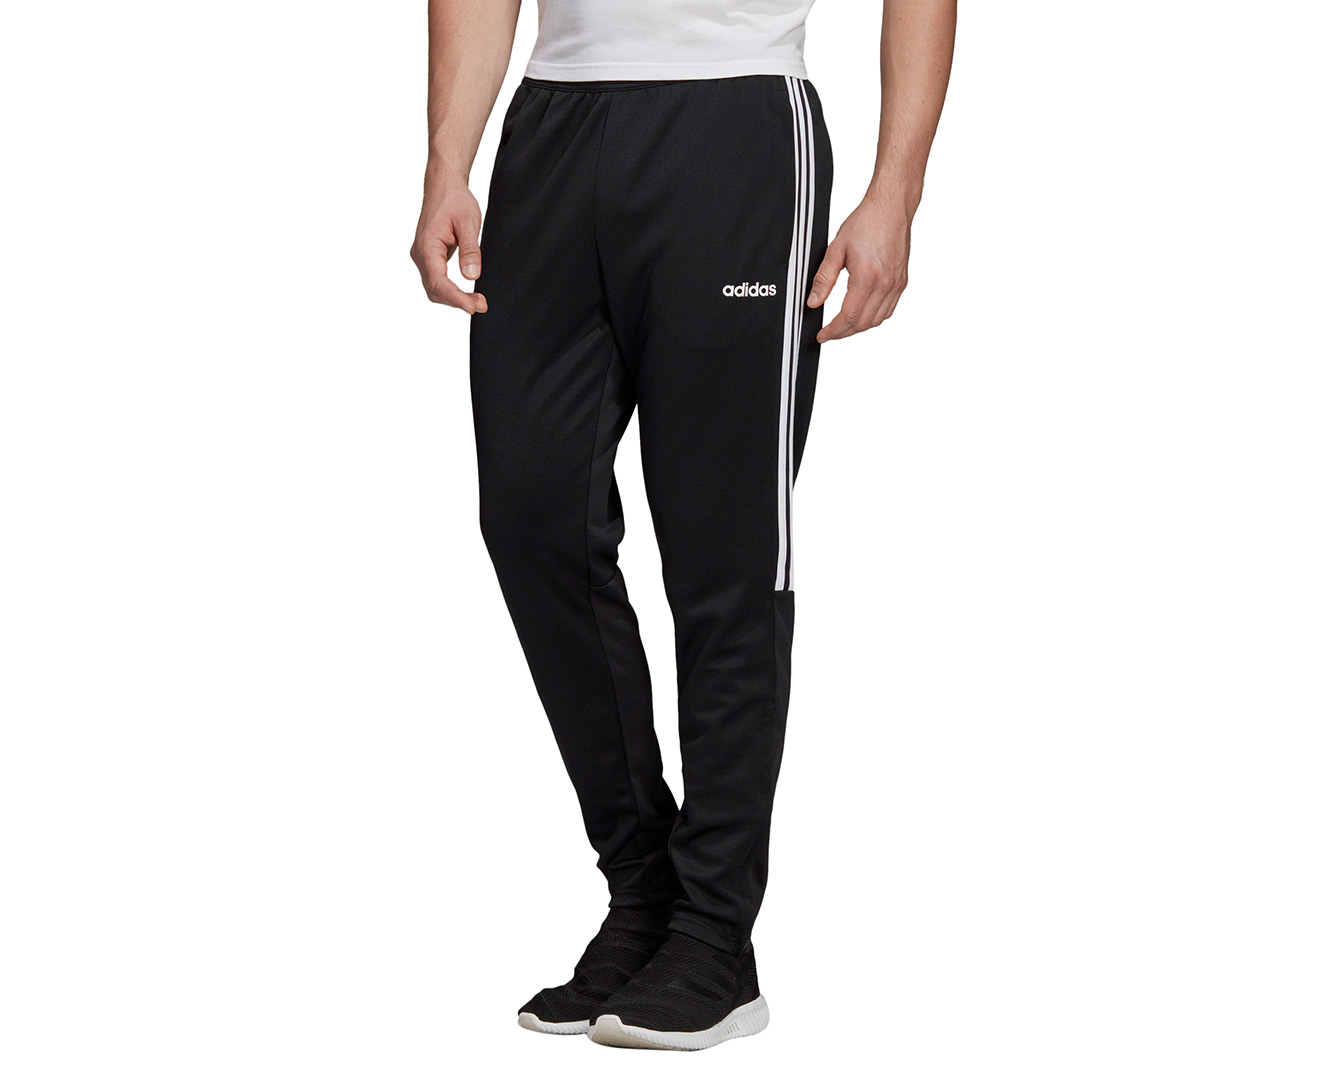 Adidas Men's Sereno 19 Training Pant - Black/White | Catch.com.au